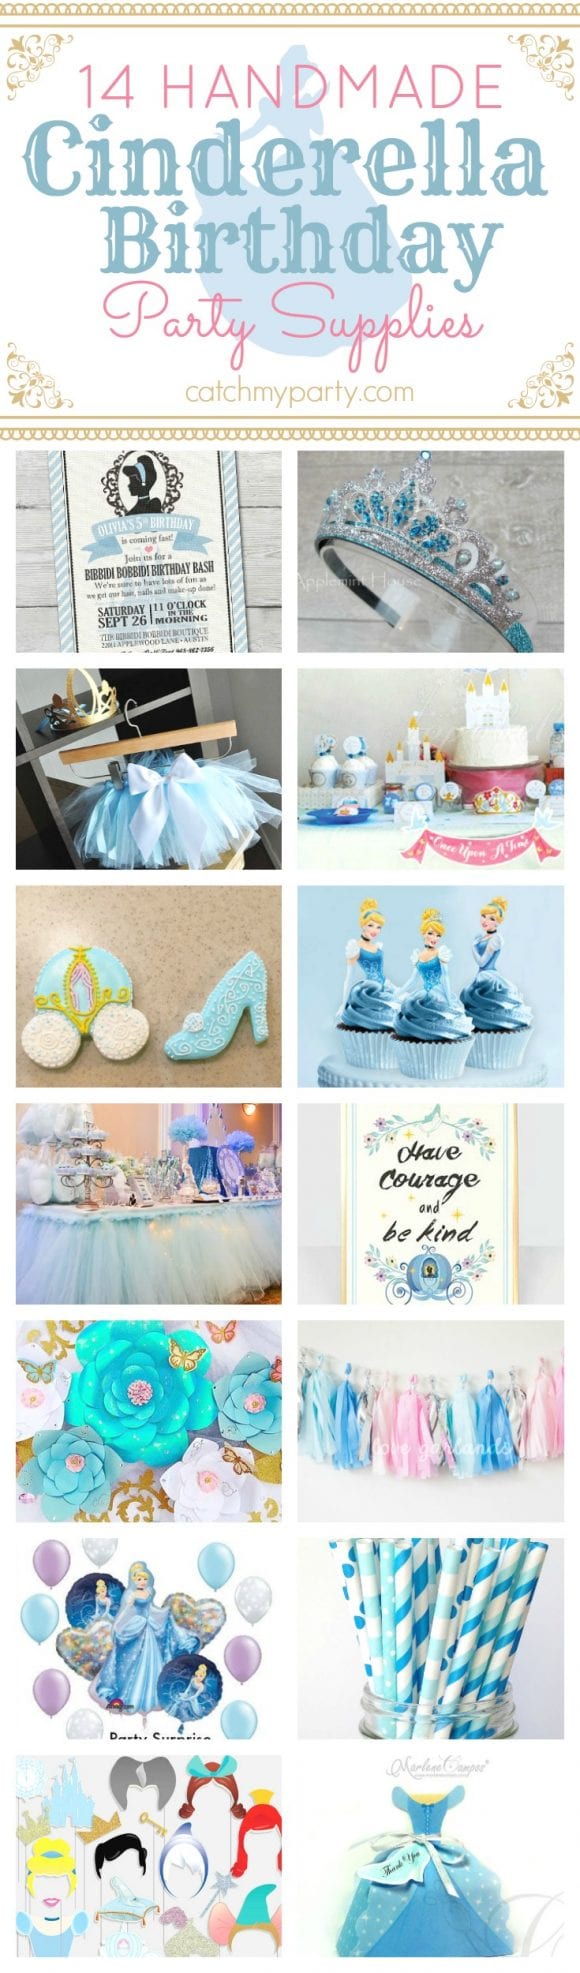 14 Handmade Cinderella birthday party supplies | CatchMyparty.com